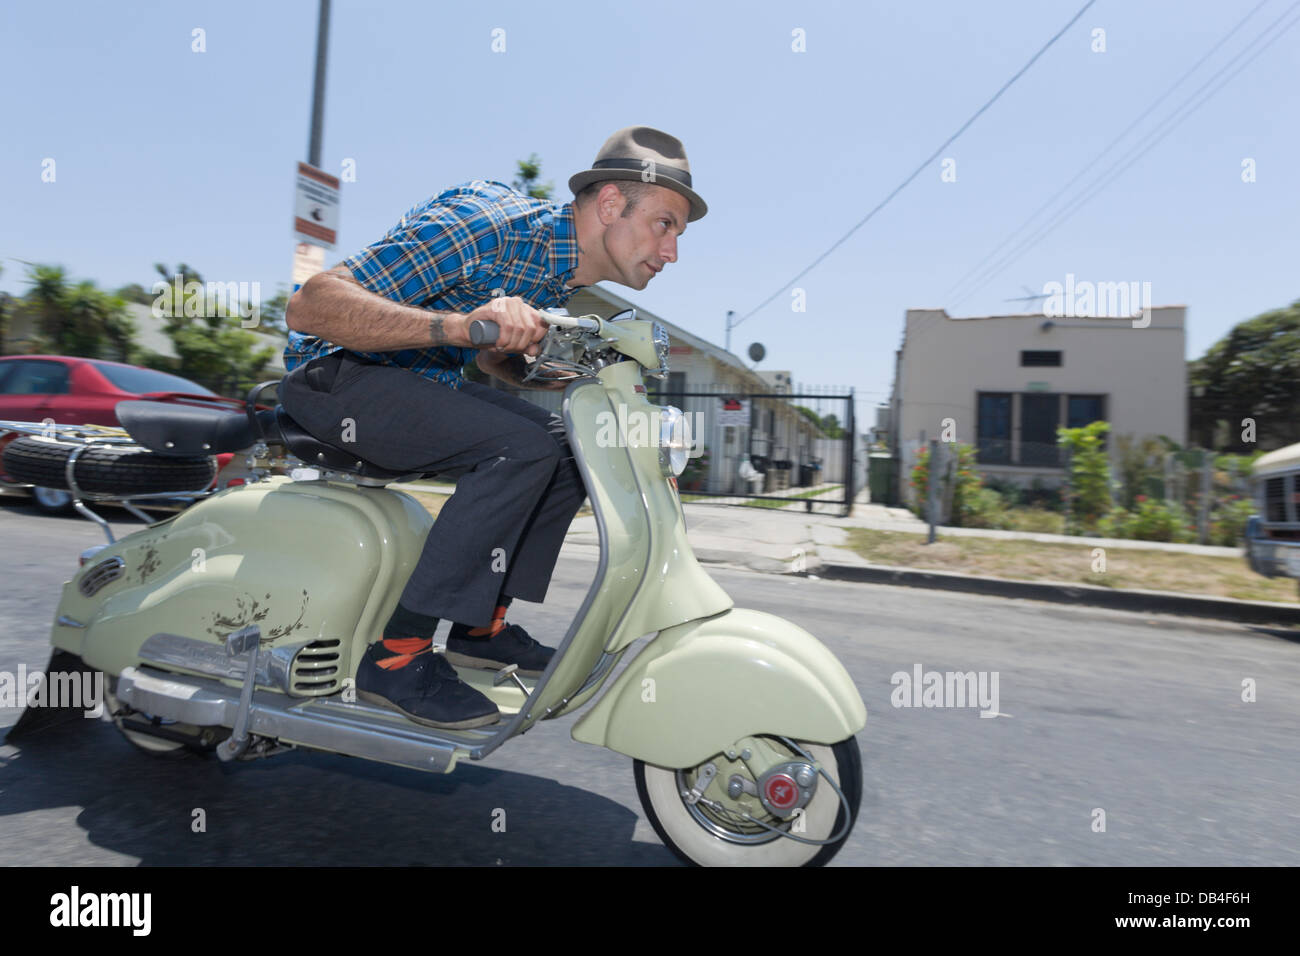 SILVERLAKE, CA 3 Juli - Aaron Rose Reiten ein Moped in Silverlake, Kalifornien am 3. Juli 2008. Stockfoto